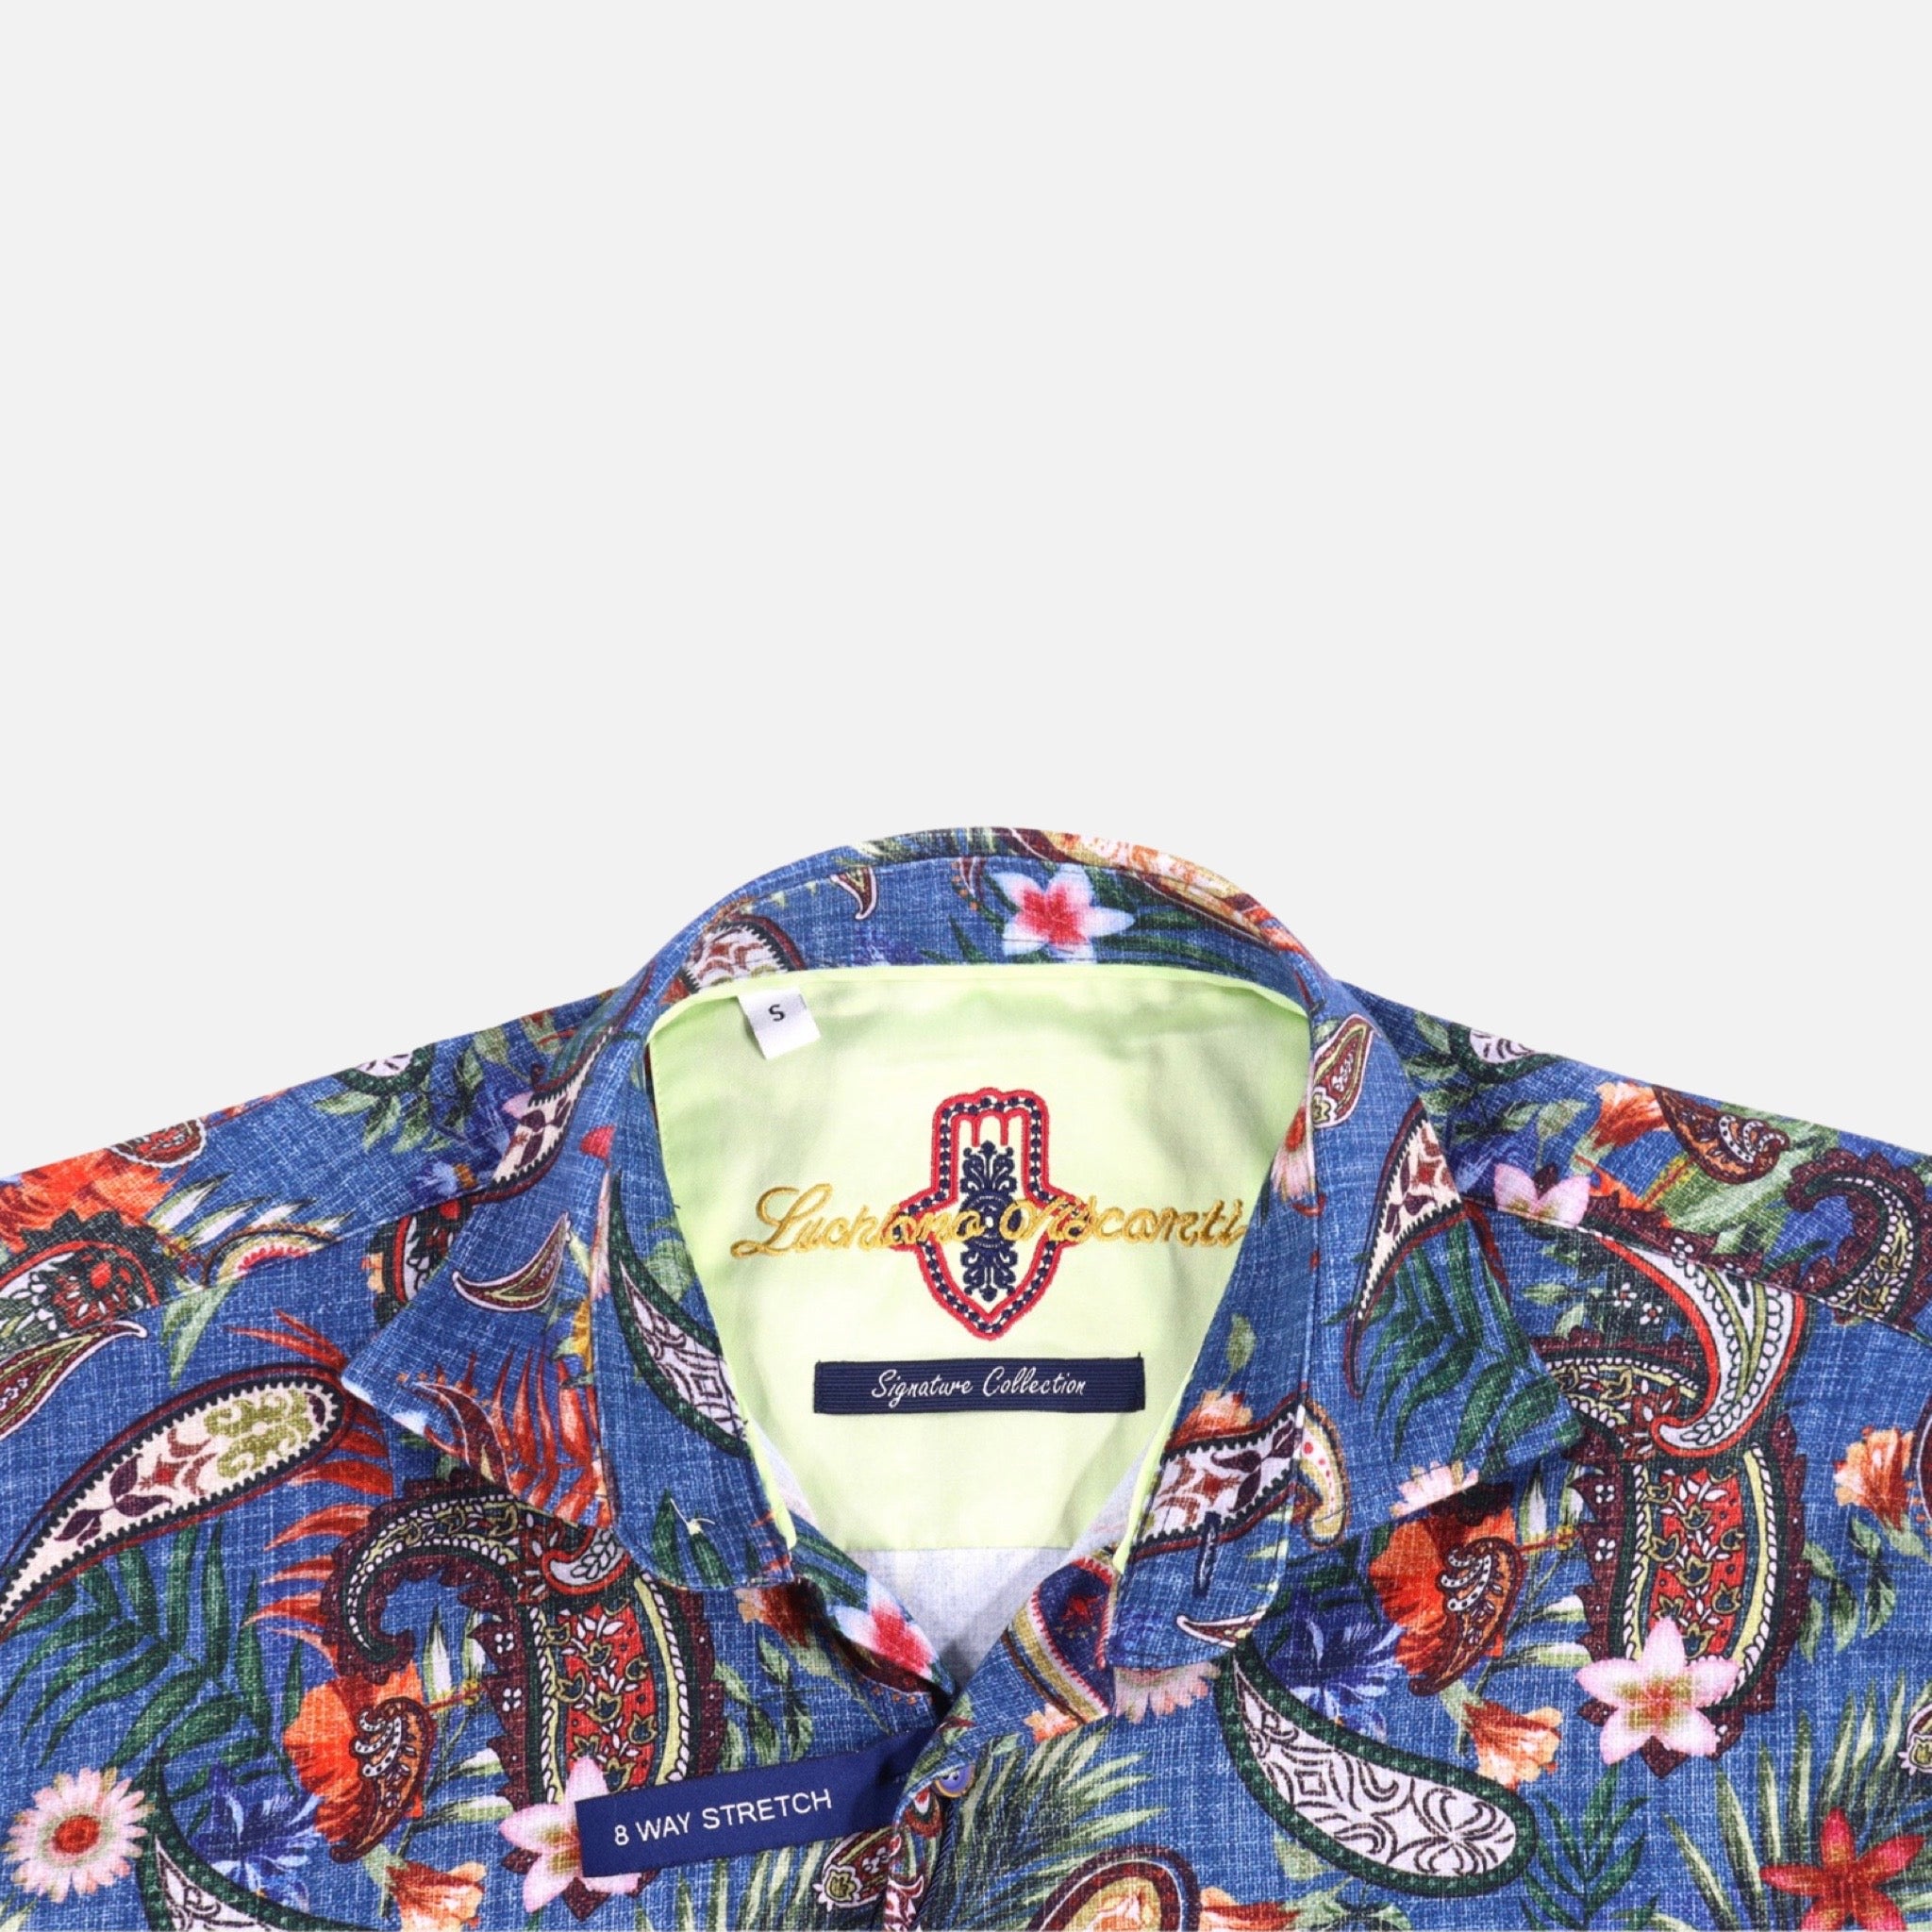 Luchiano Visconti Paisley Shirt For Men | 4877 Multi | Clearance